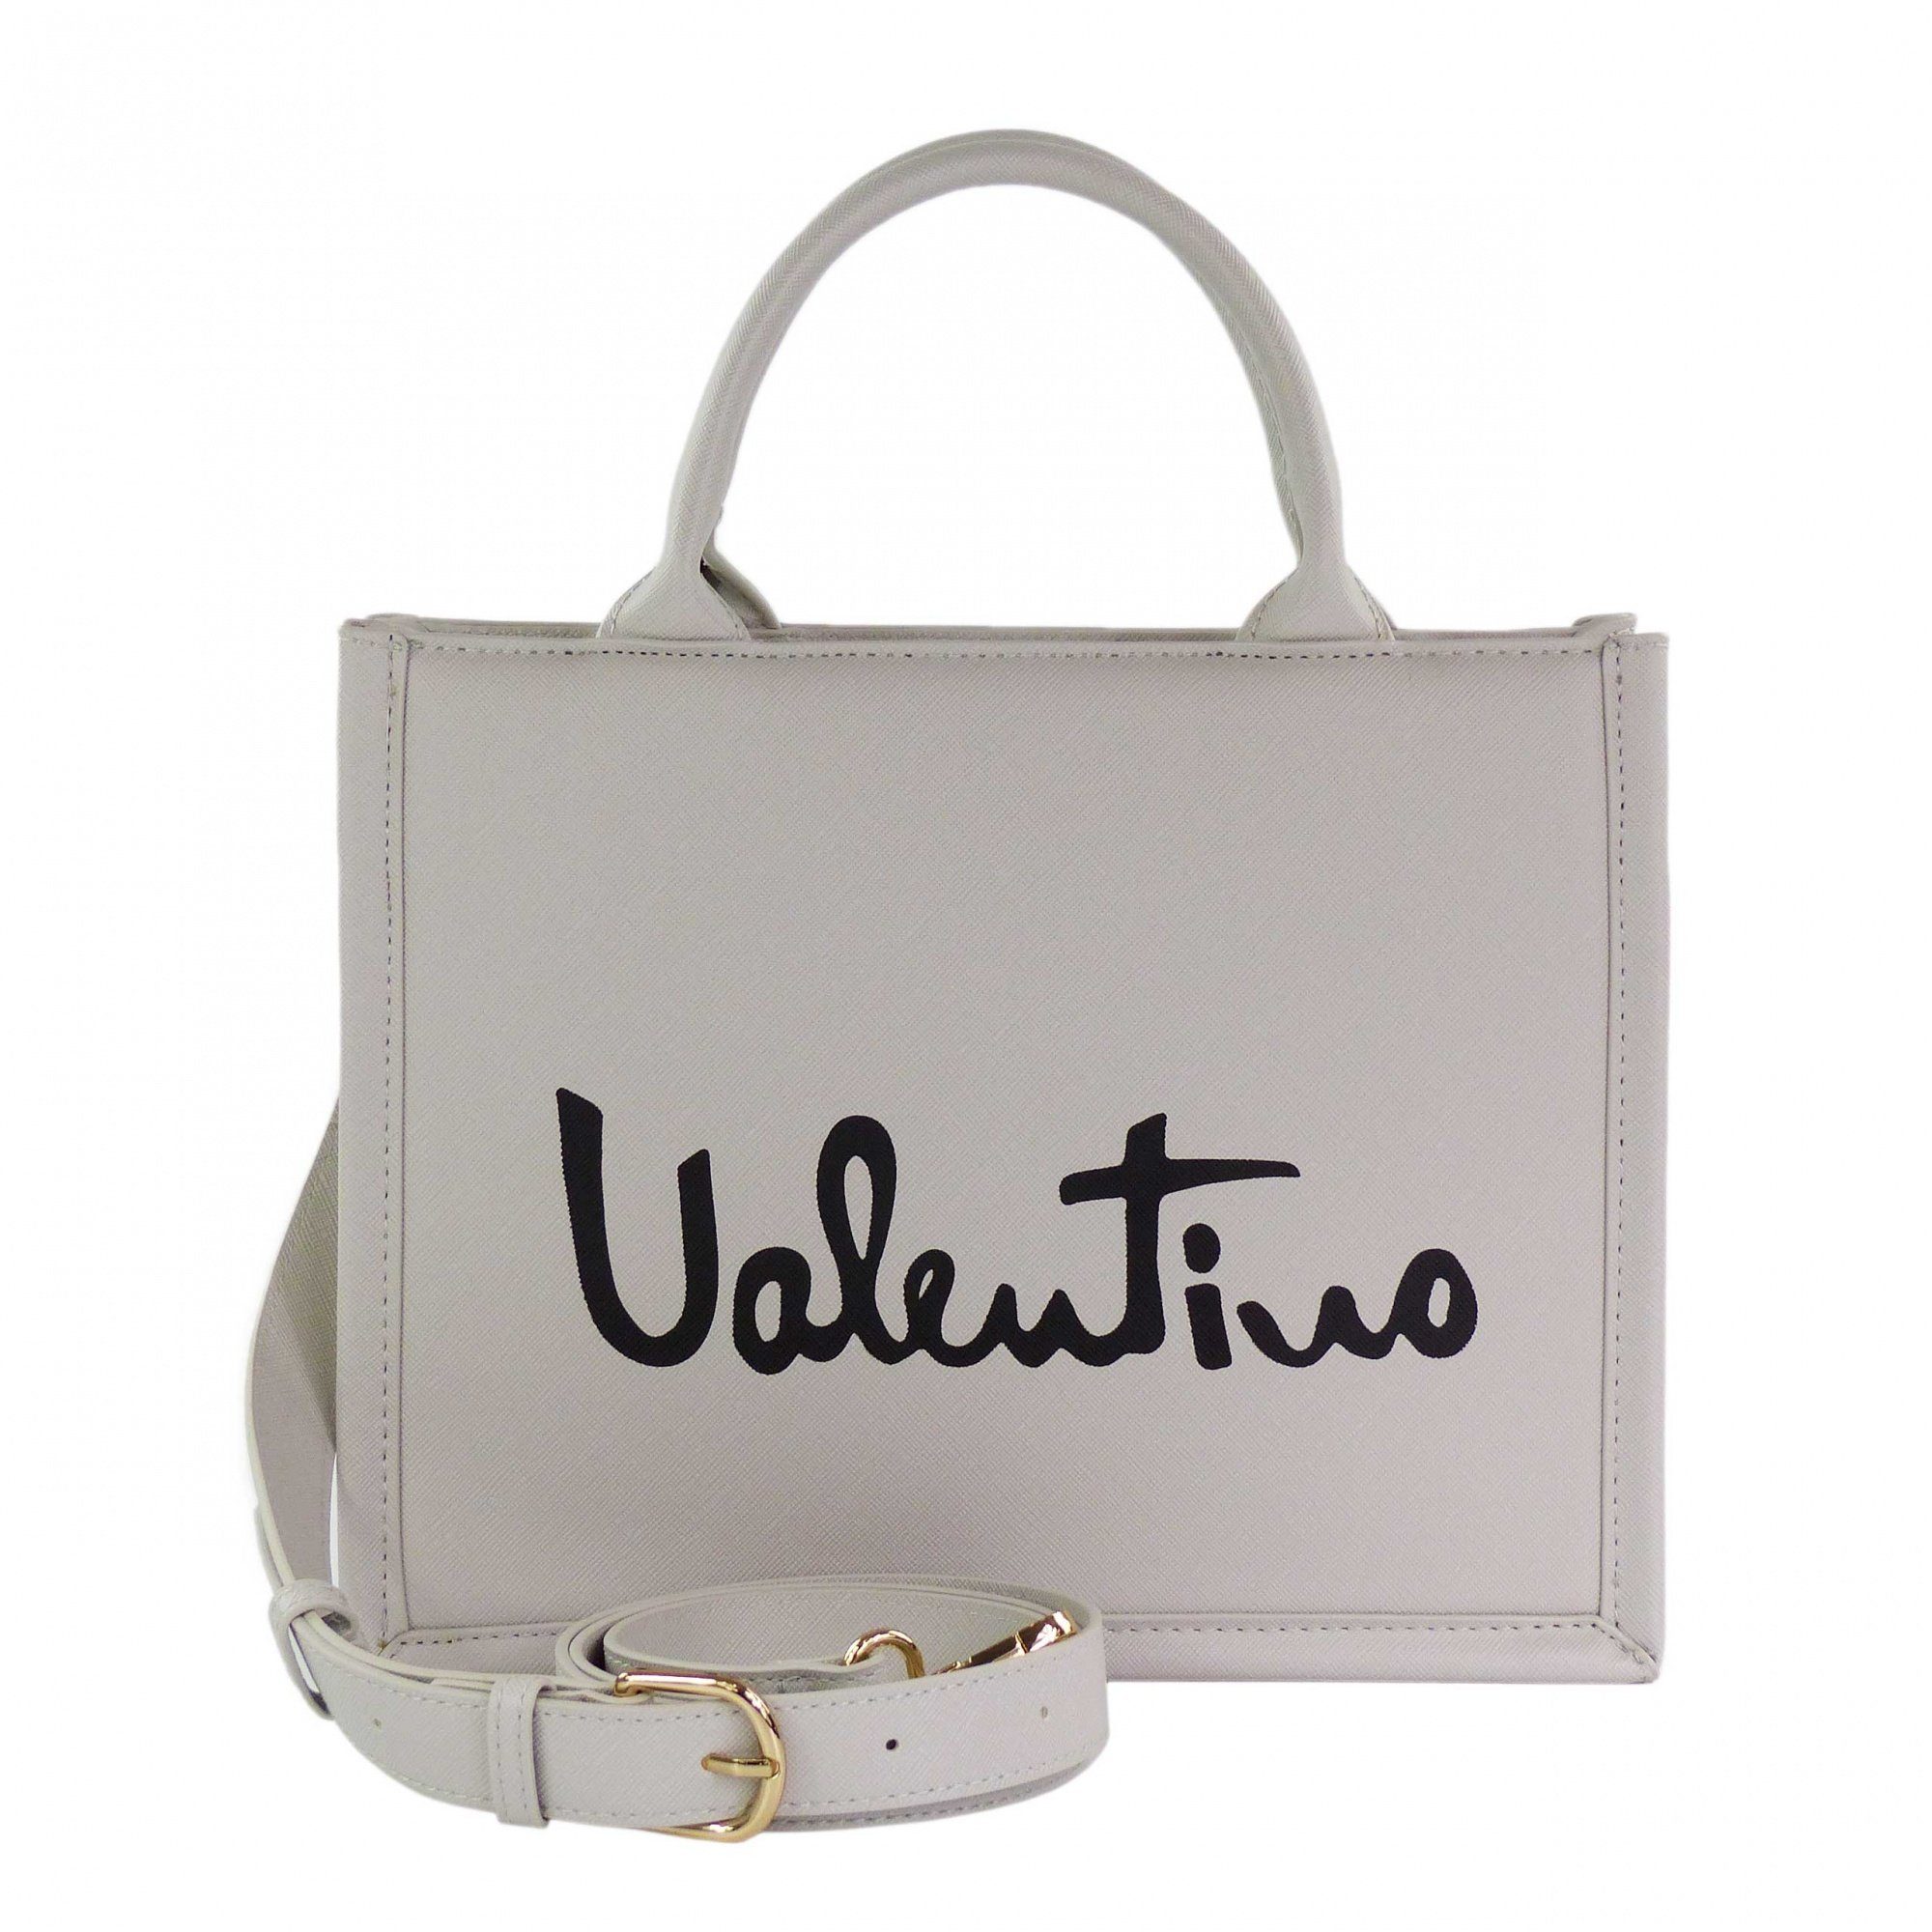 VALENTINO BAGS Handtasche Nero SHORE Ghiacc VBS6XA06 / RE